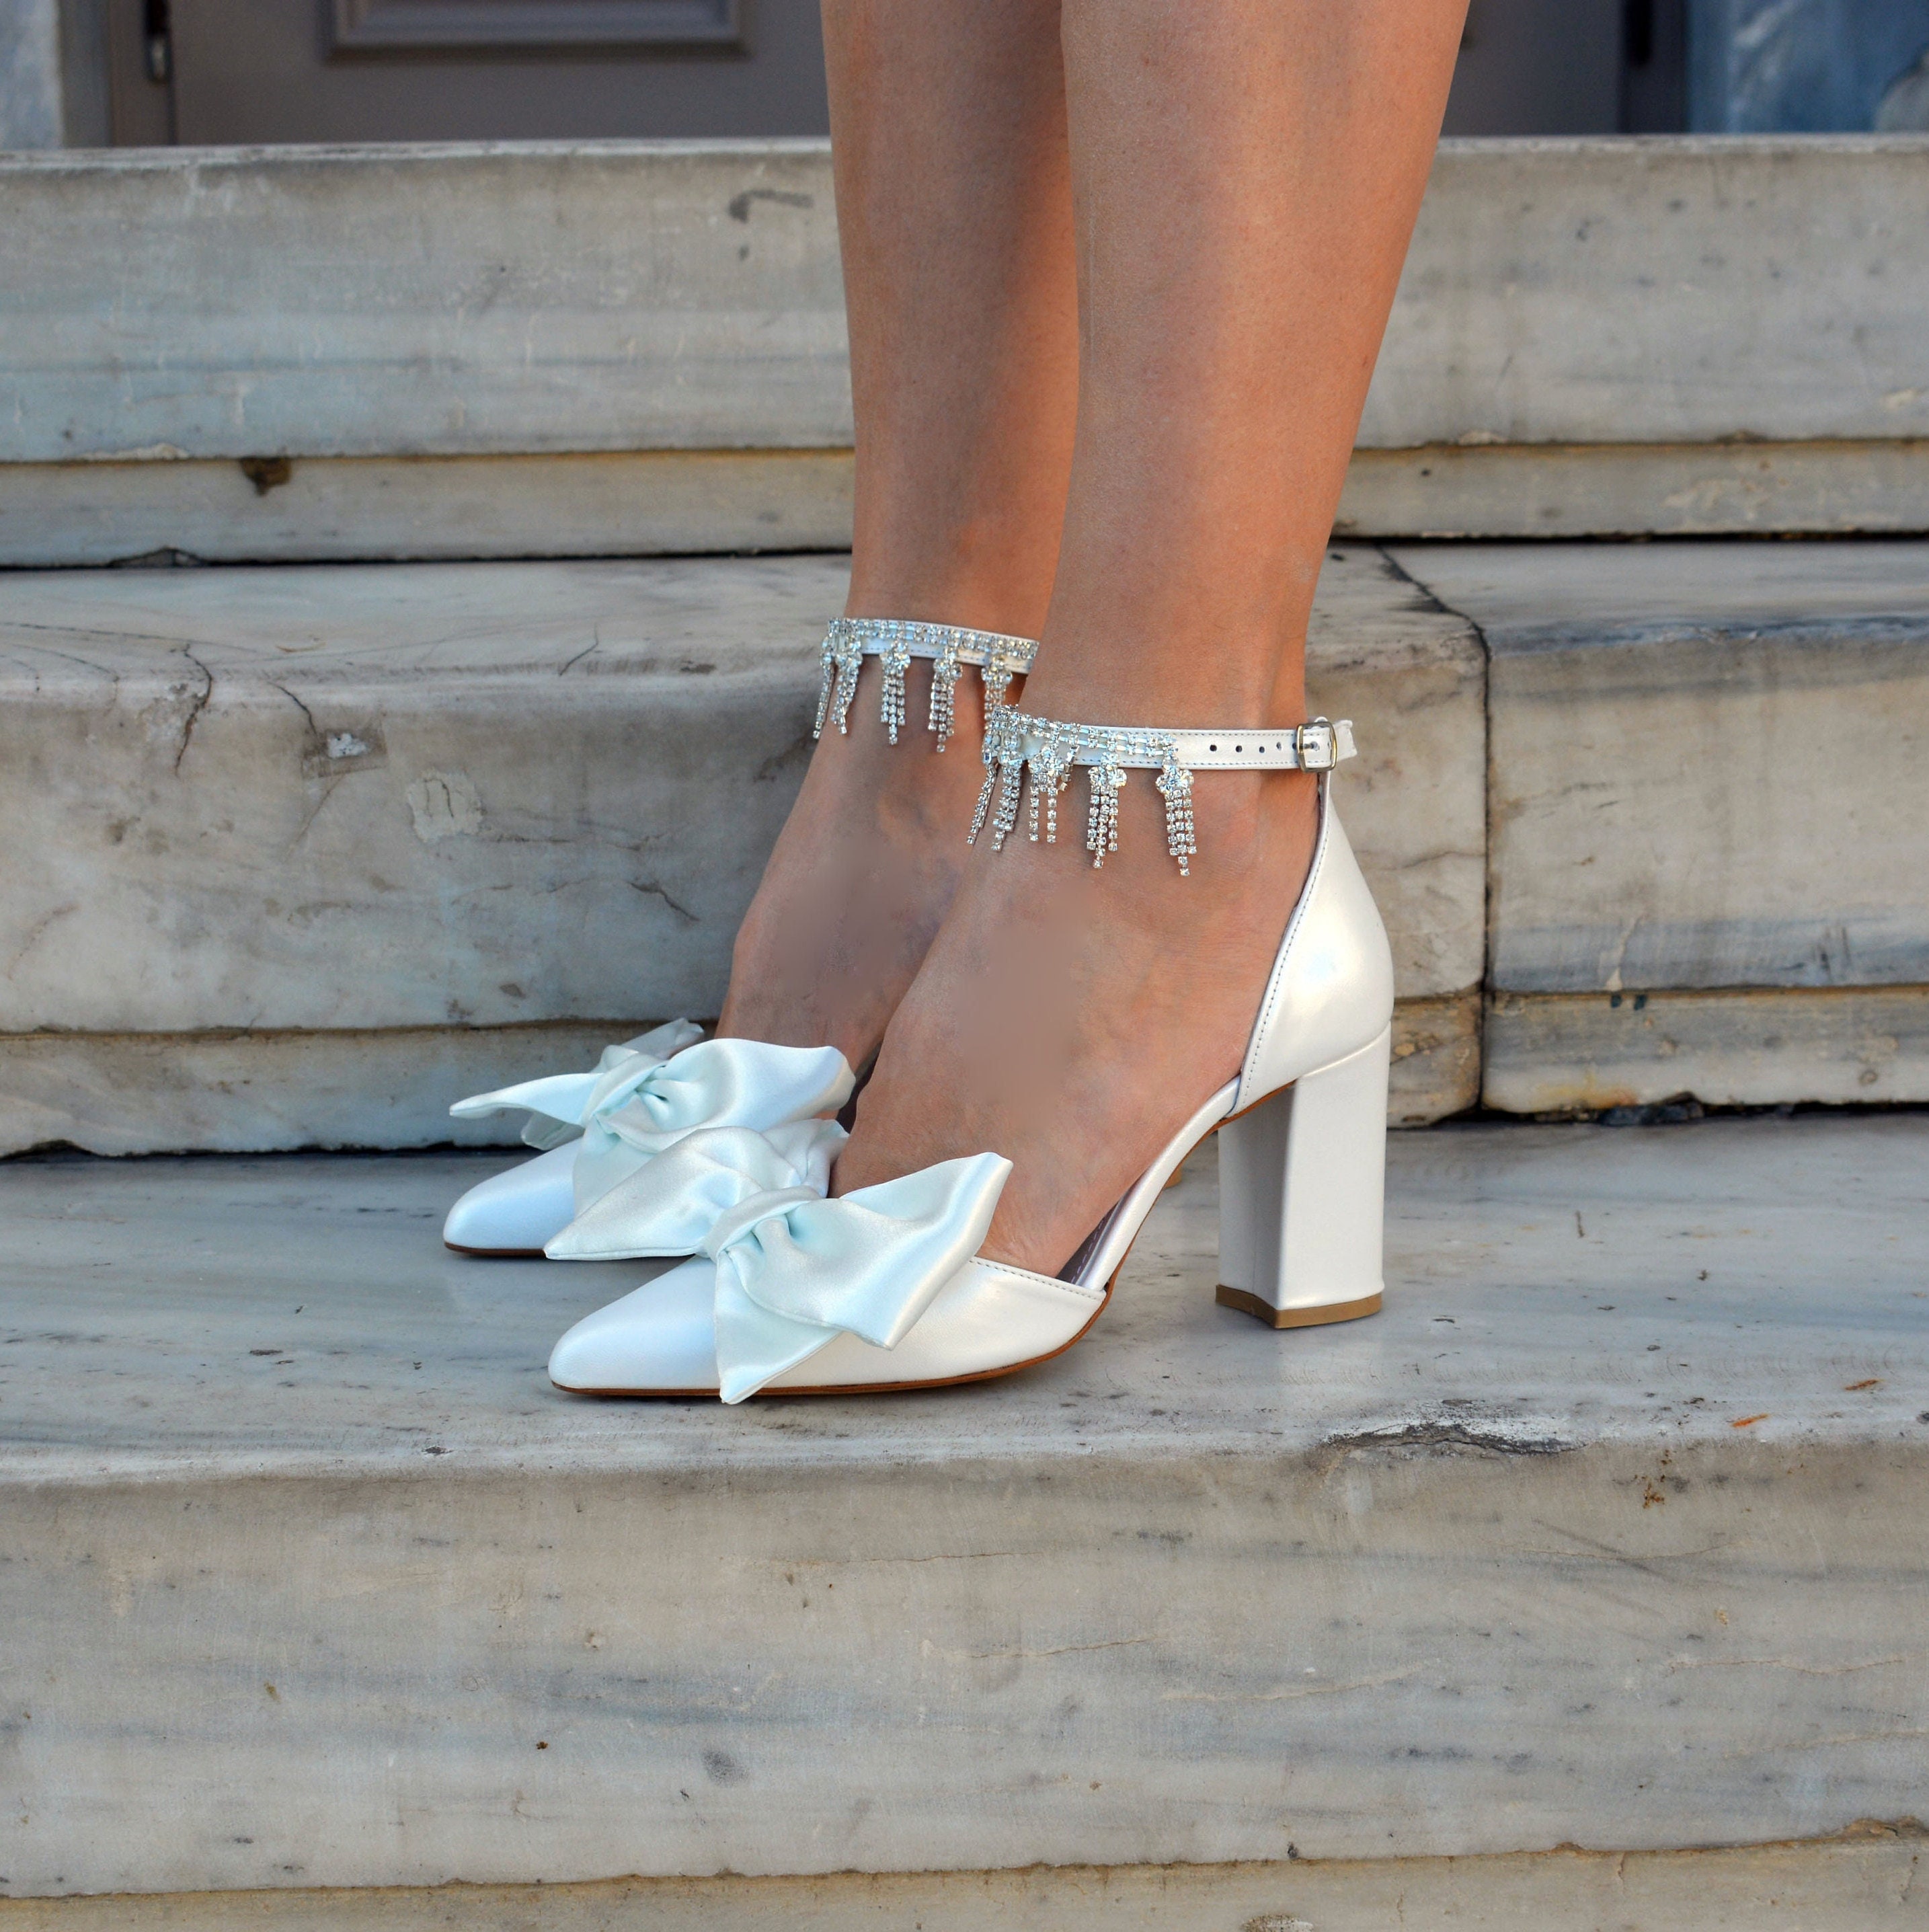 Celbreez White Wedding Shoes for Women Lace Heels Bridal Vintage... | eBay